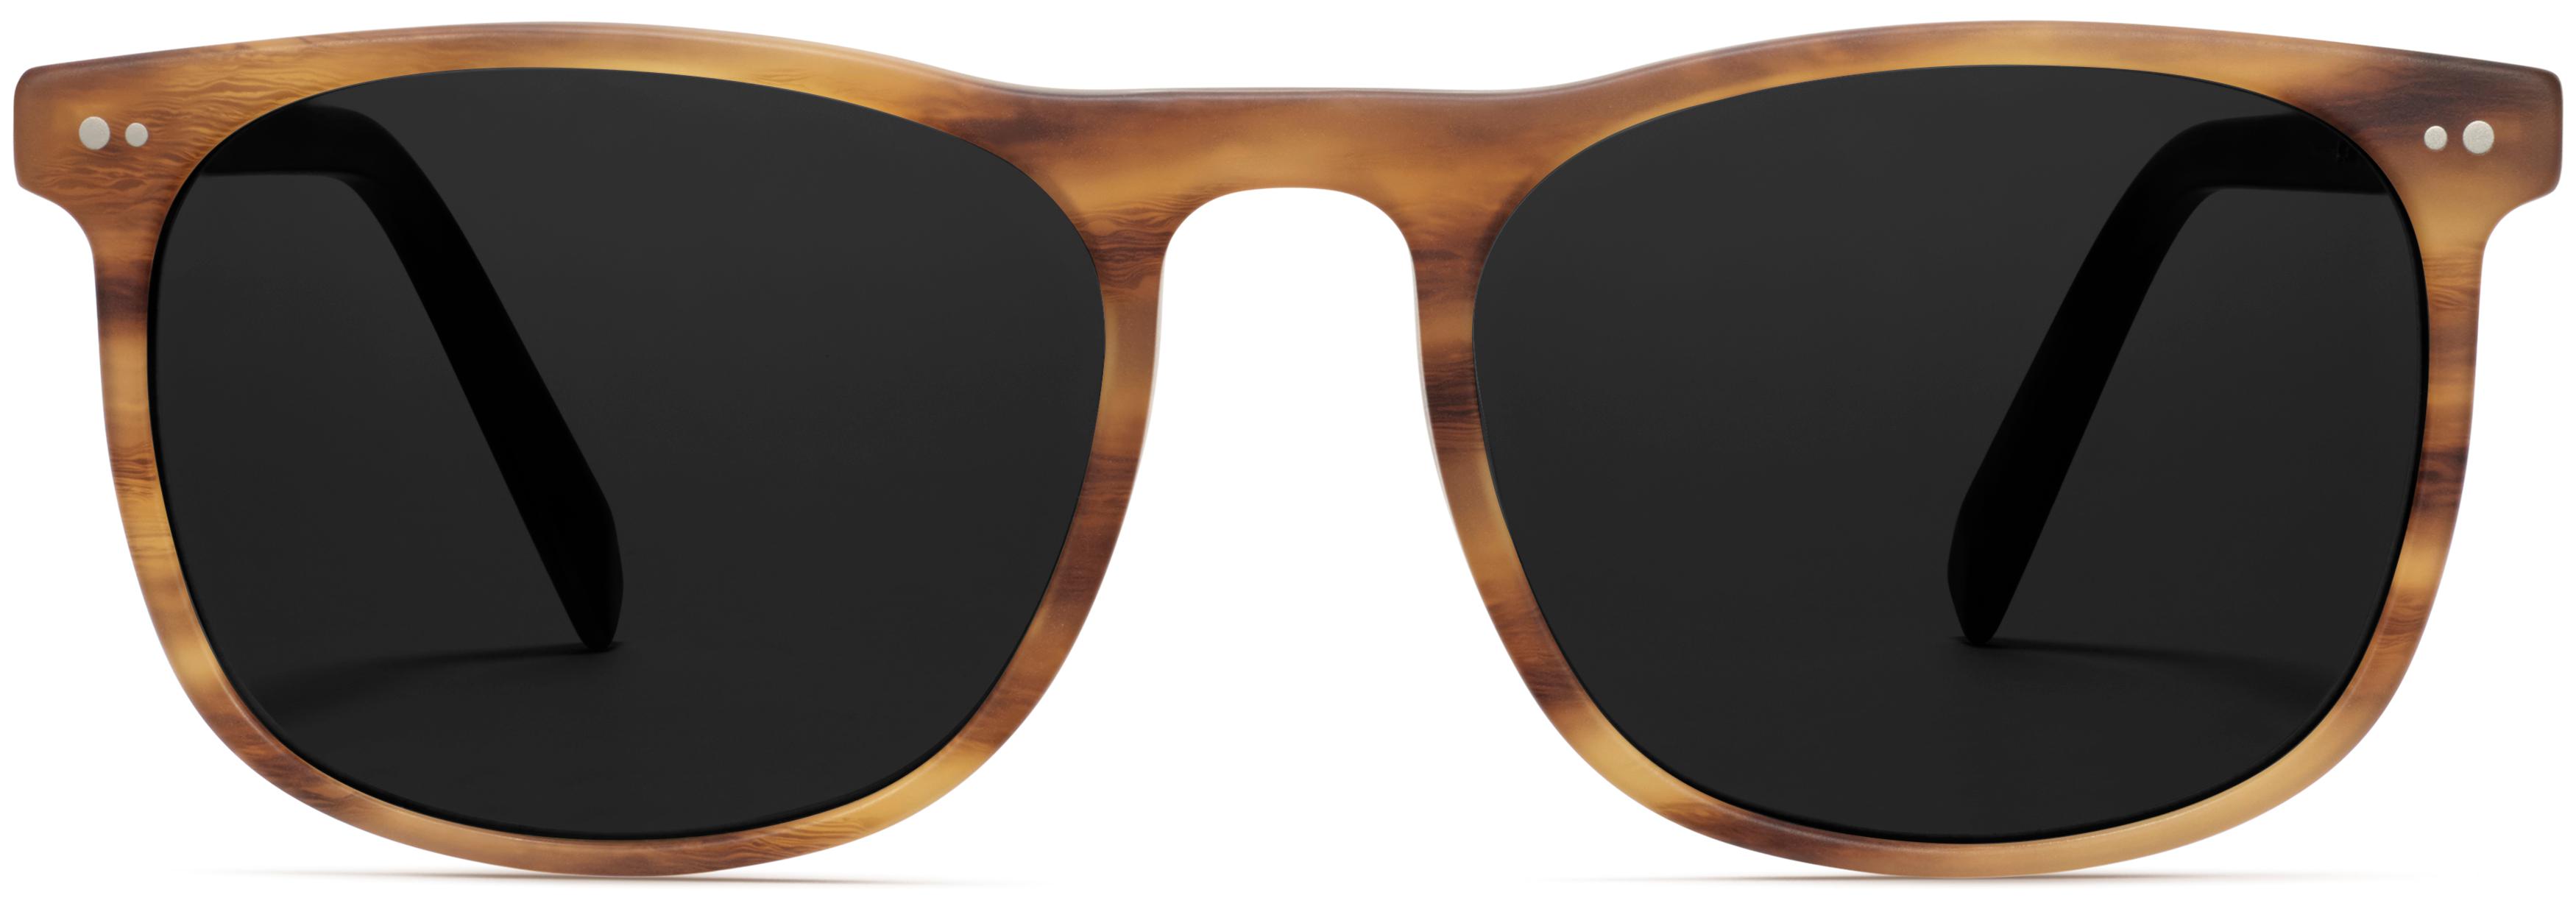 Alvin Sunglasses in English Oak Matte | Warby Parker